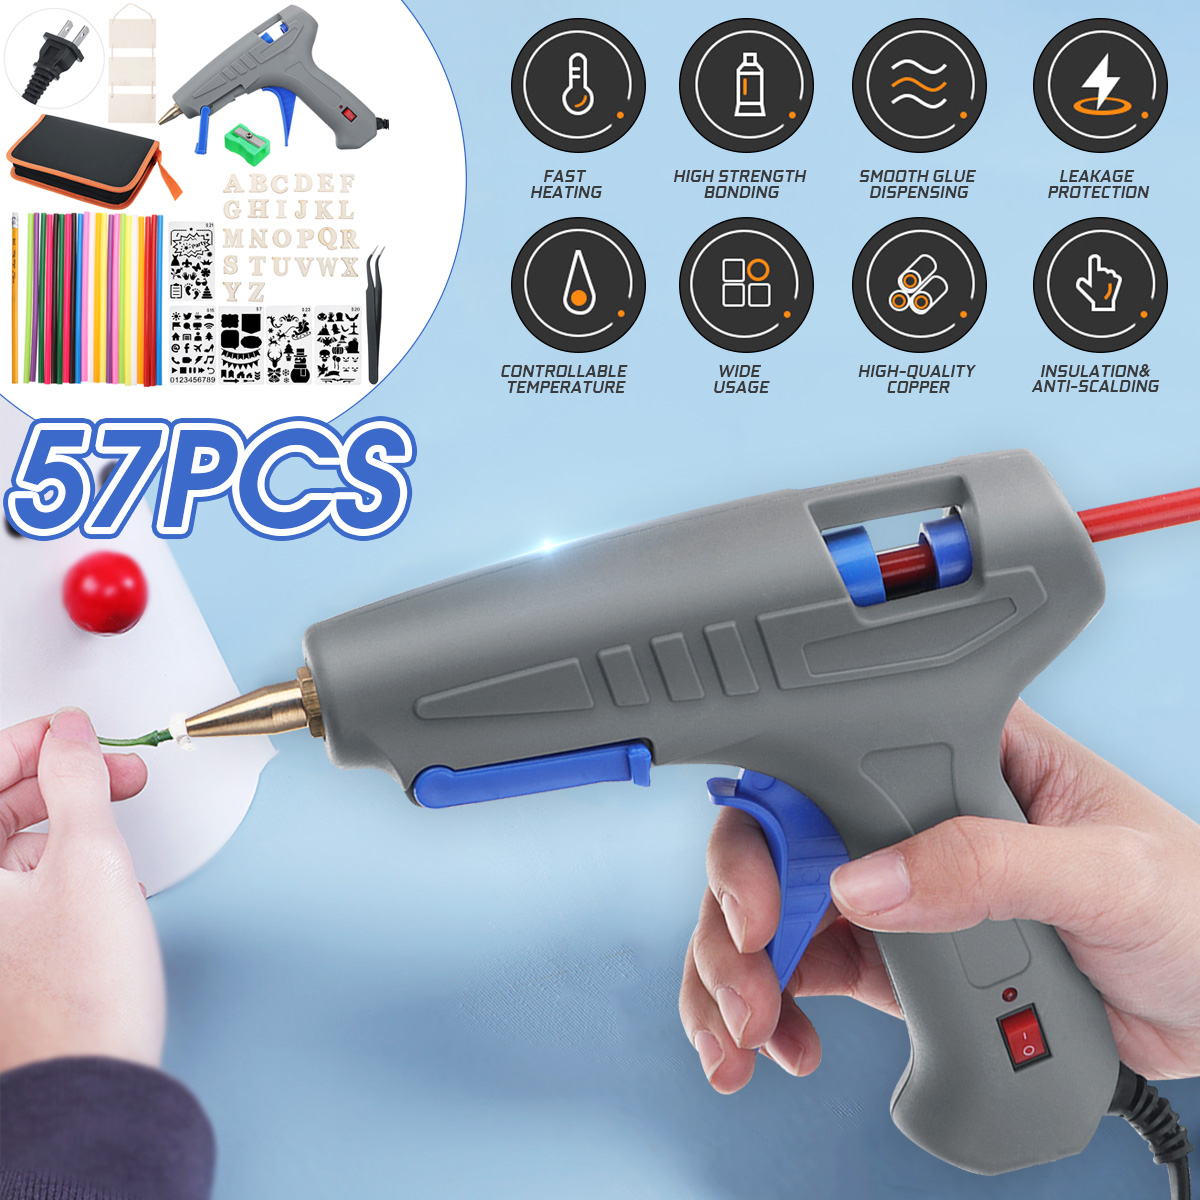 57Pcs-30W-Cordless-Electric-Hot-Glue-Guns-DIY-Art-Craft-Glue-Guns-with-Adhesive-Melt-Glue-Sticks-1659813-2